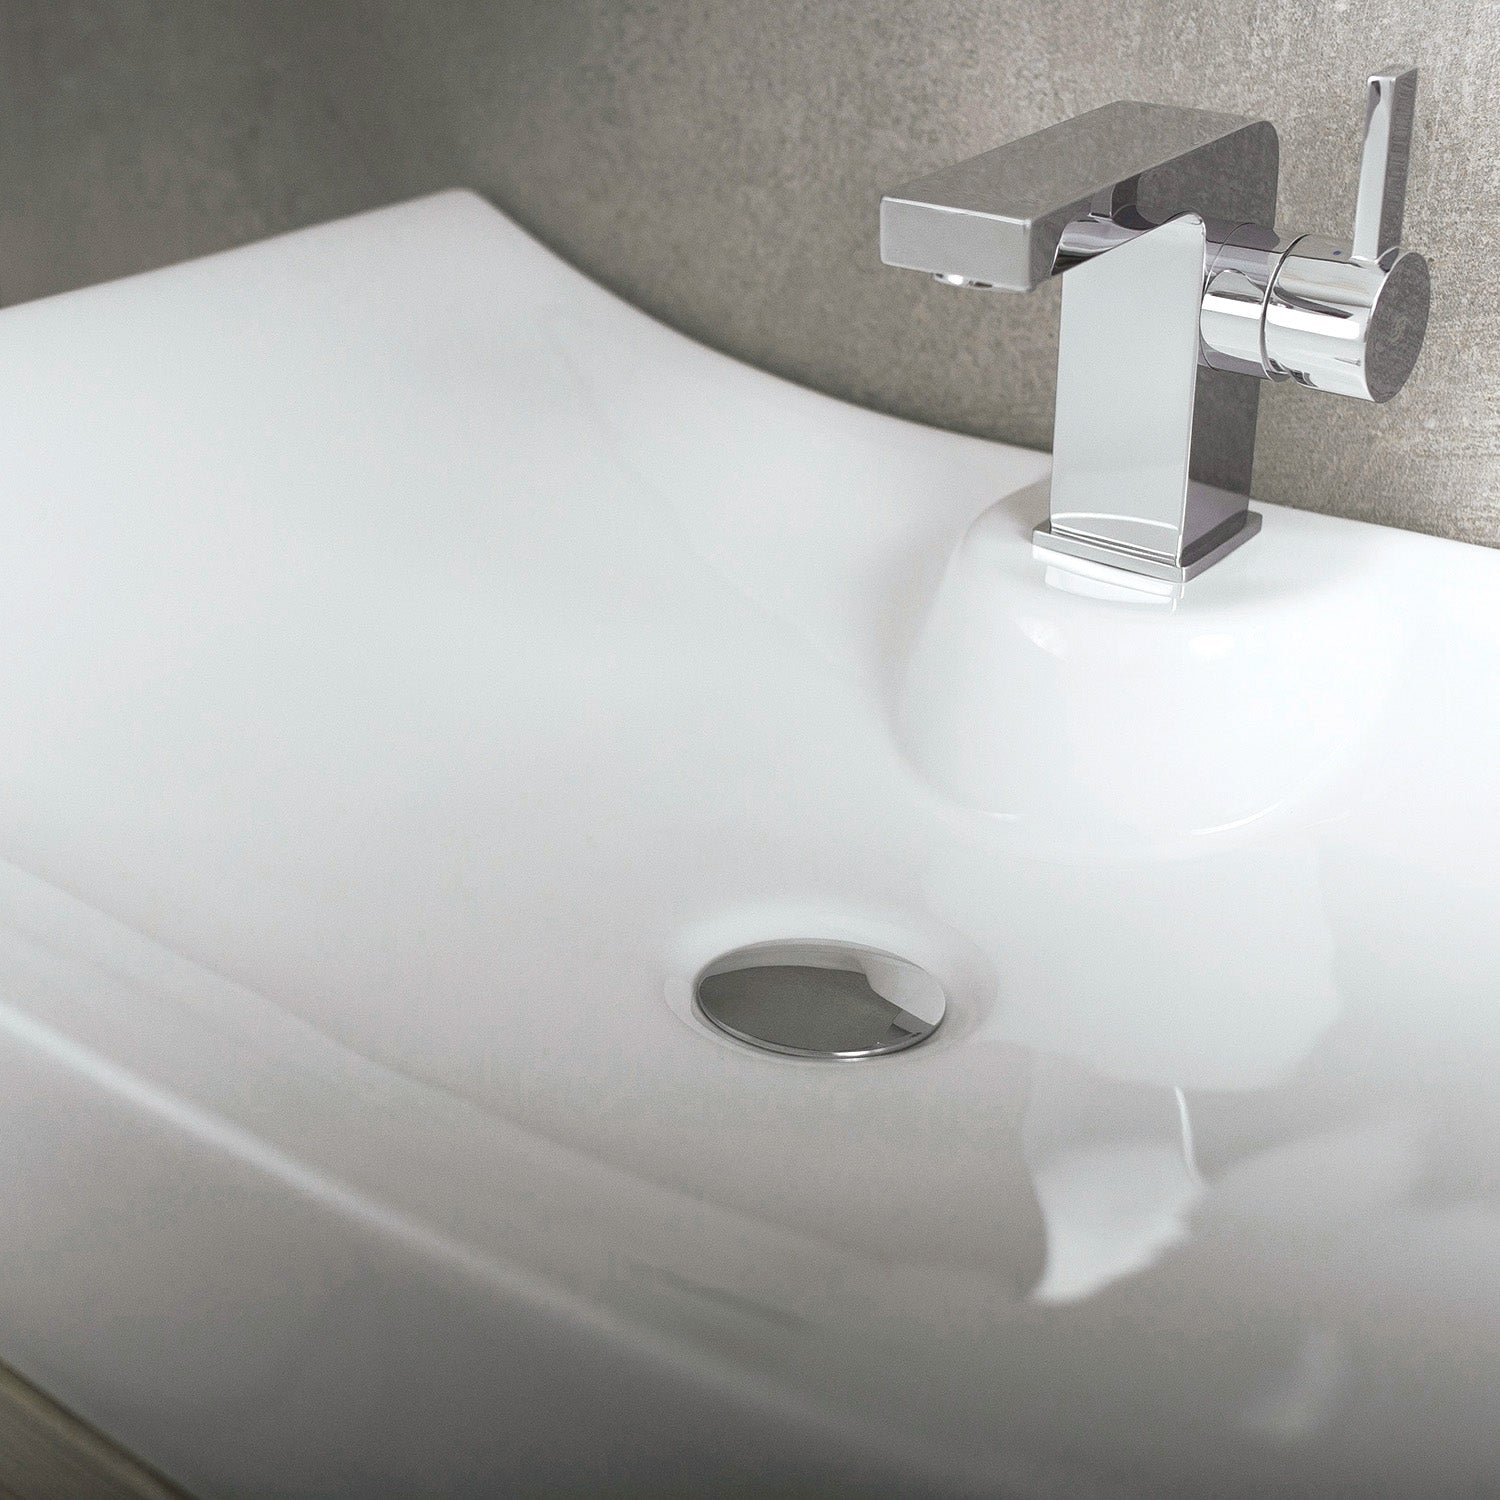 DAX Ceramic Rectangle Single Bowl Bathroom Vessel Sink, White Finish, 27-1/8 x 16-1/8 x 5-1/4 Inches (BSN-280A)